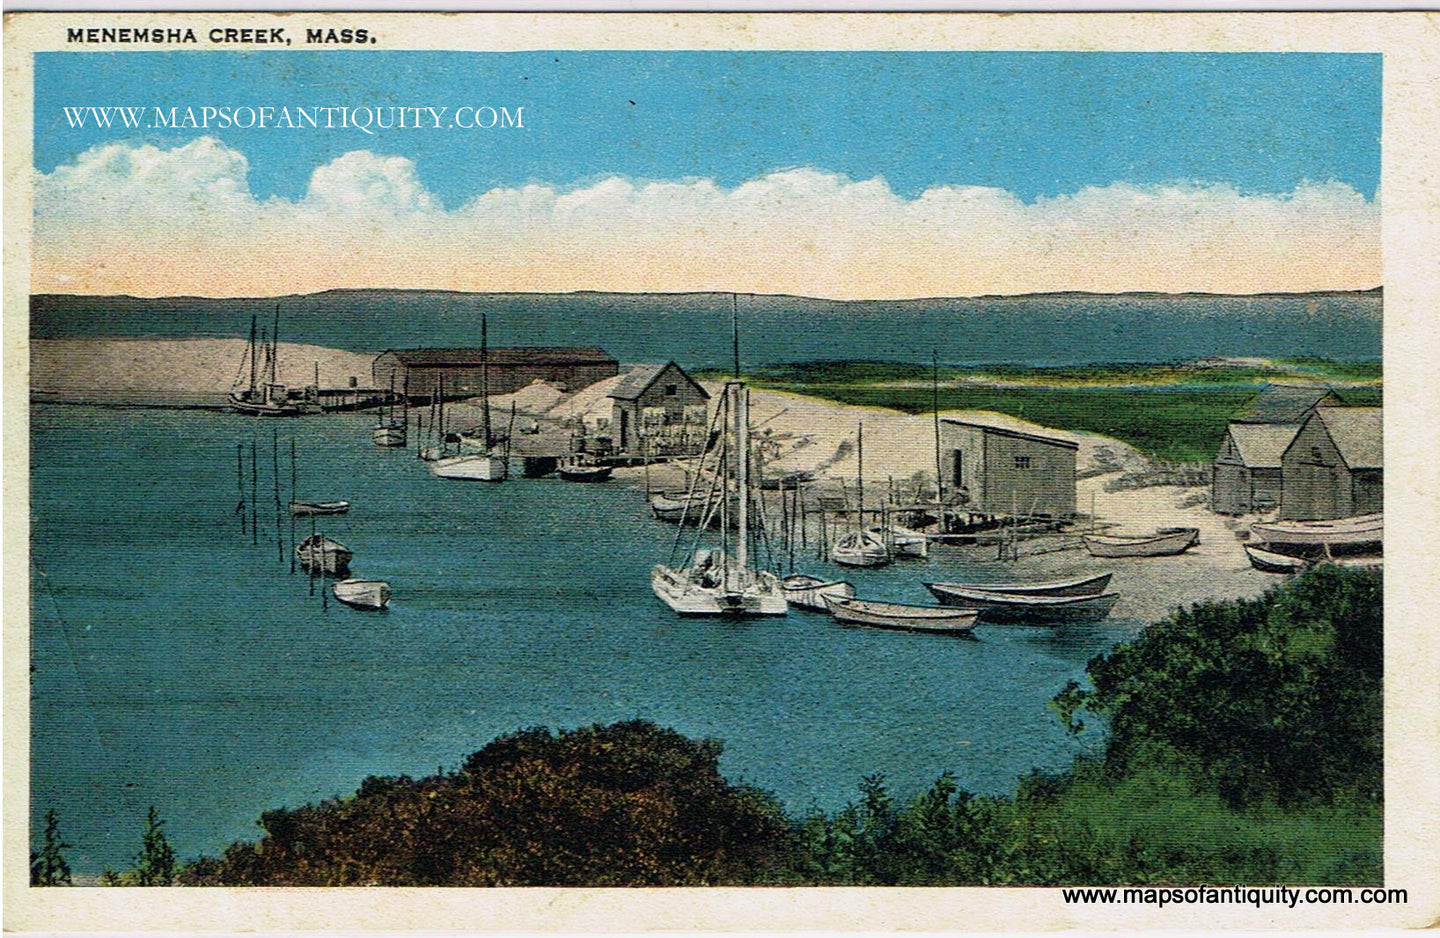 Antique-Colored-Postcard-Menemsha-Creek-Mass-(-Martha's-Vineyard-)---Postcard-Postcard-Massachusetts-1915-1930-Tichnor-Quality-Views-Maps-Of-Antiquity